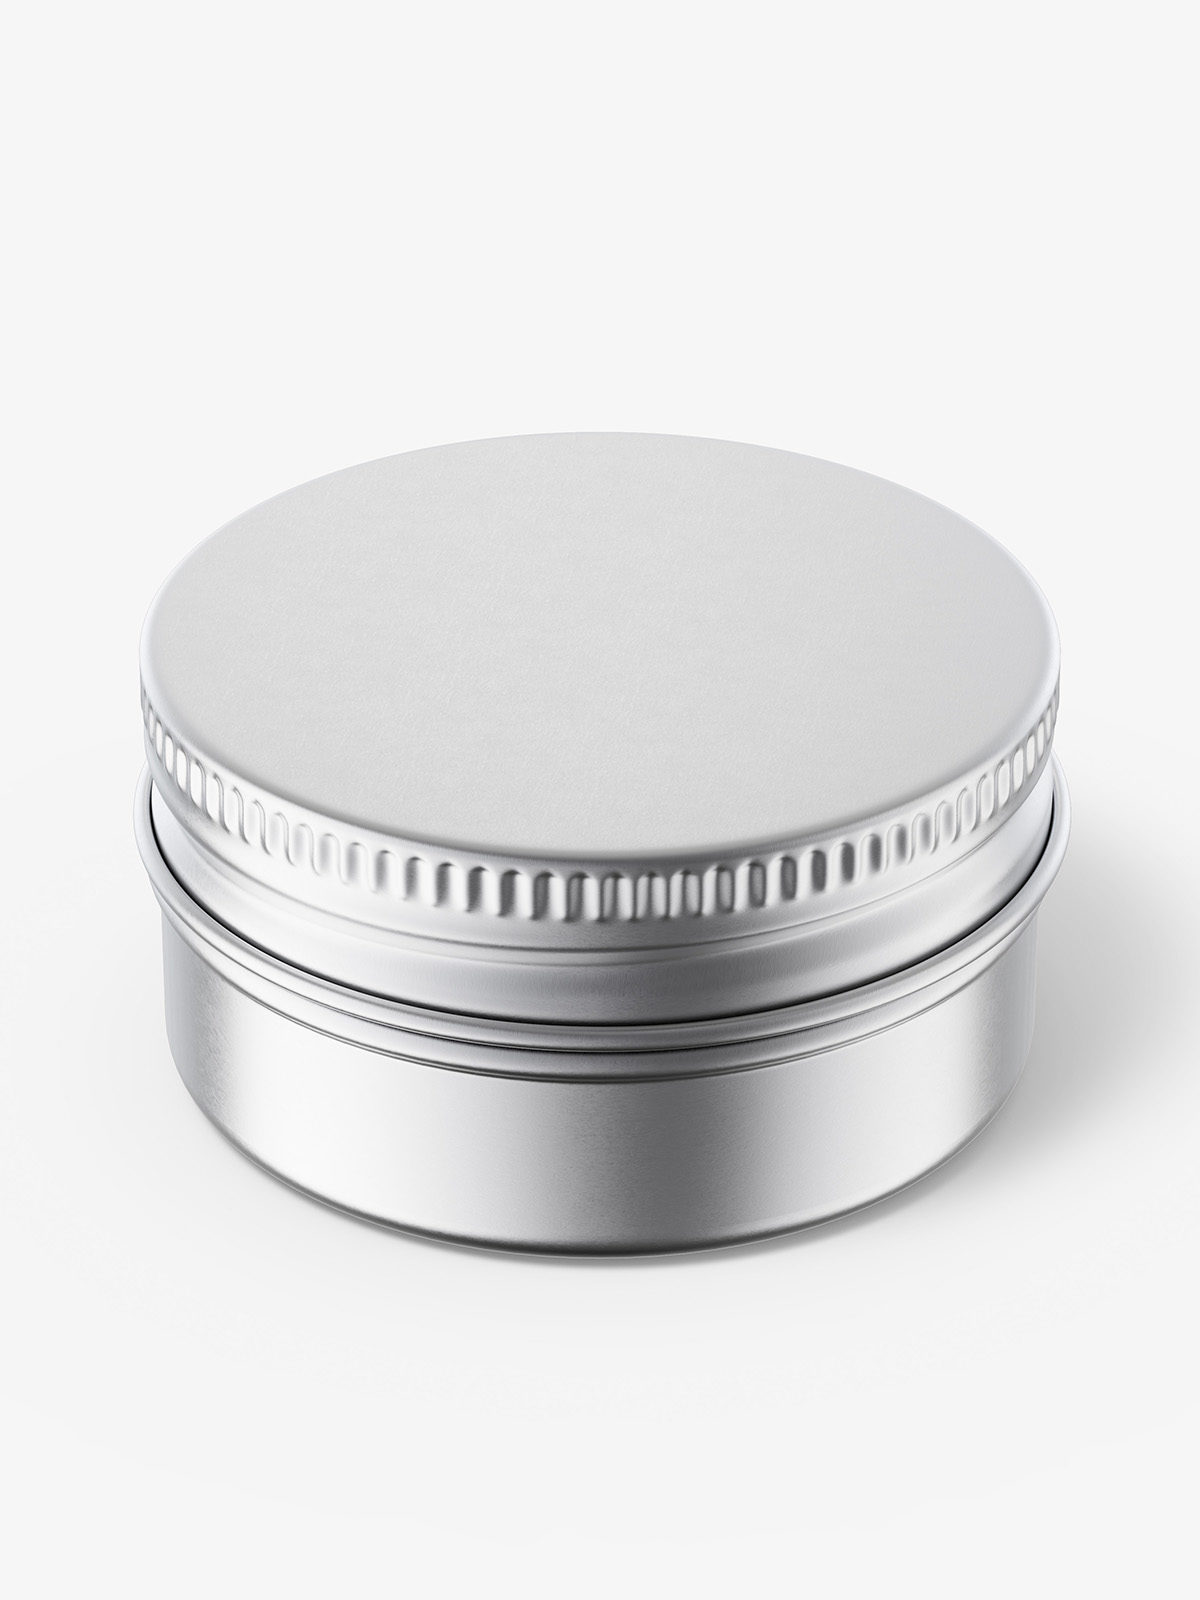 Download Metallic tin cream jar mockup - Smarty Mockups